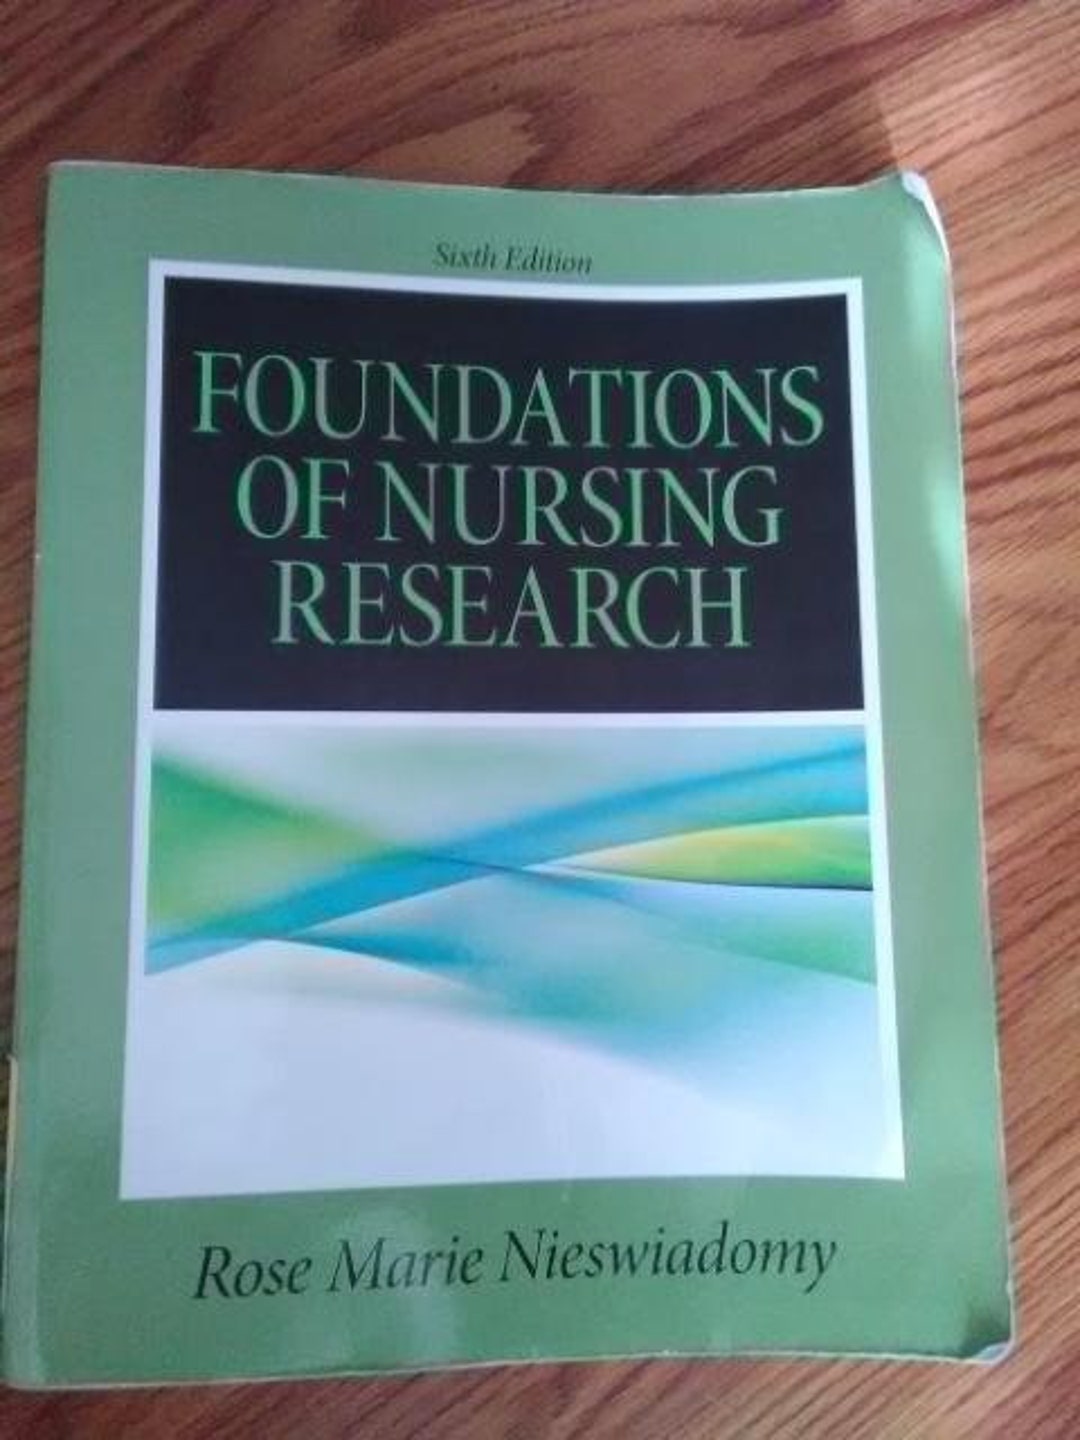 Rose　by　of　Research　Marie　Foundations　Etsy　Nursing　Nieswiadomy